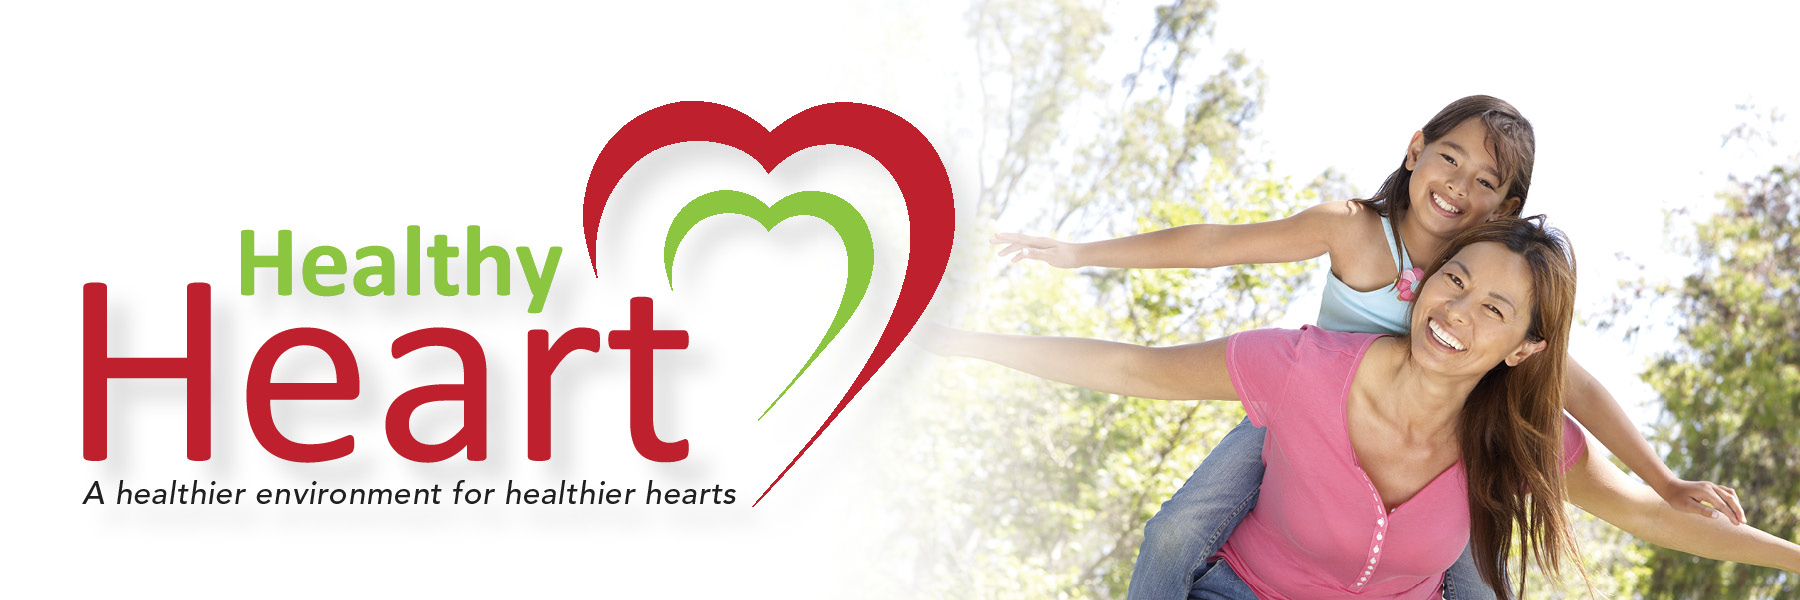 Health Heart logo and image